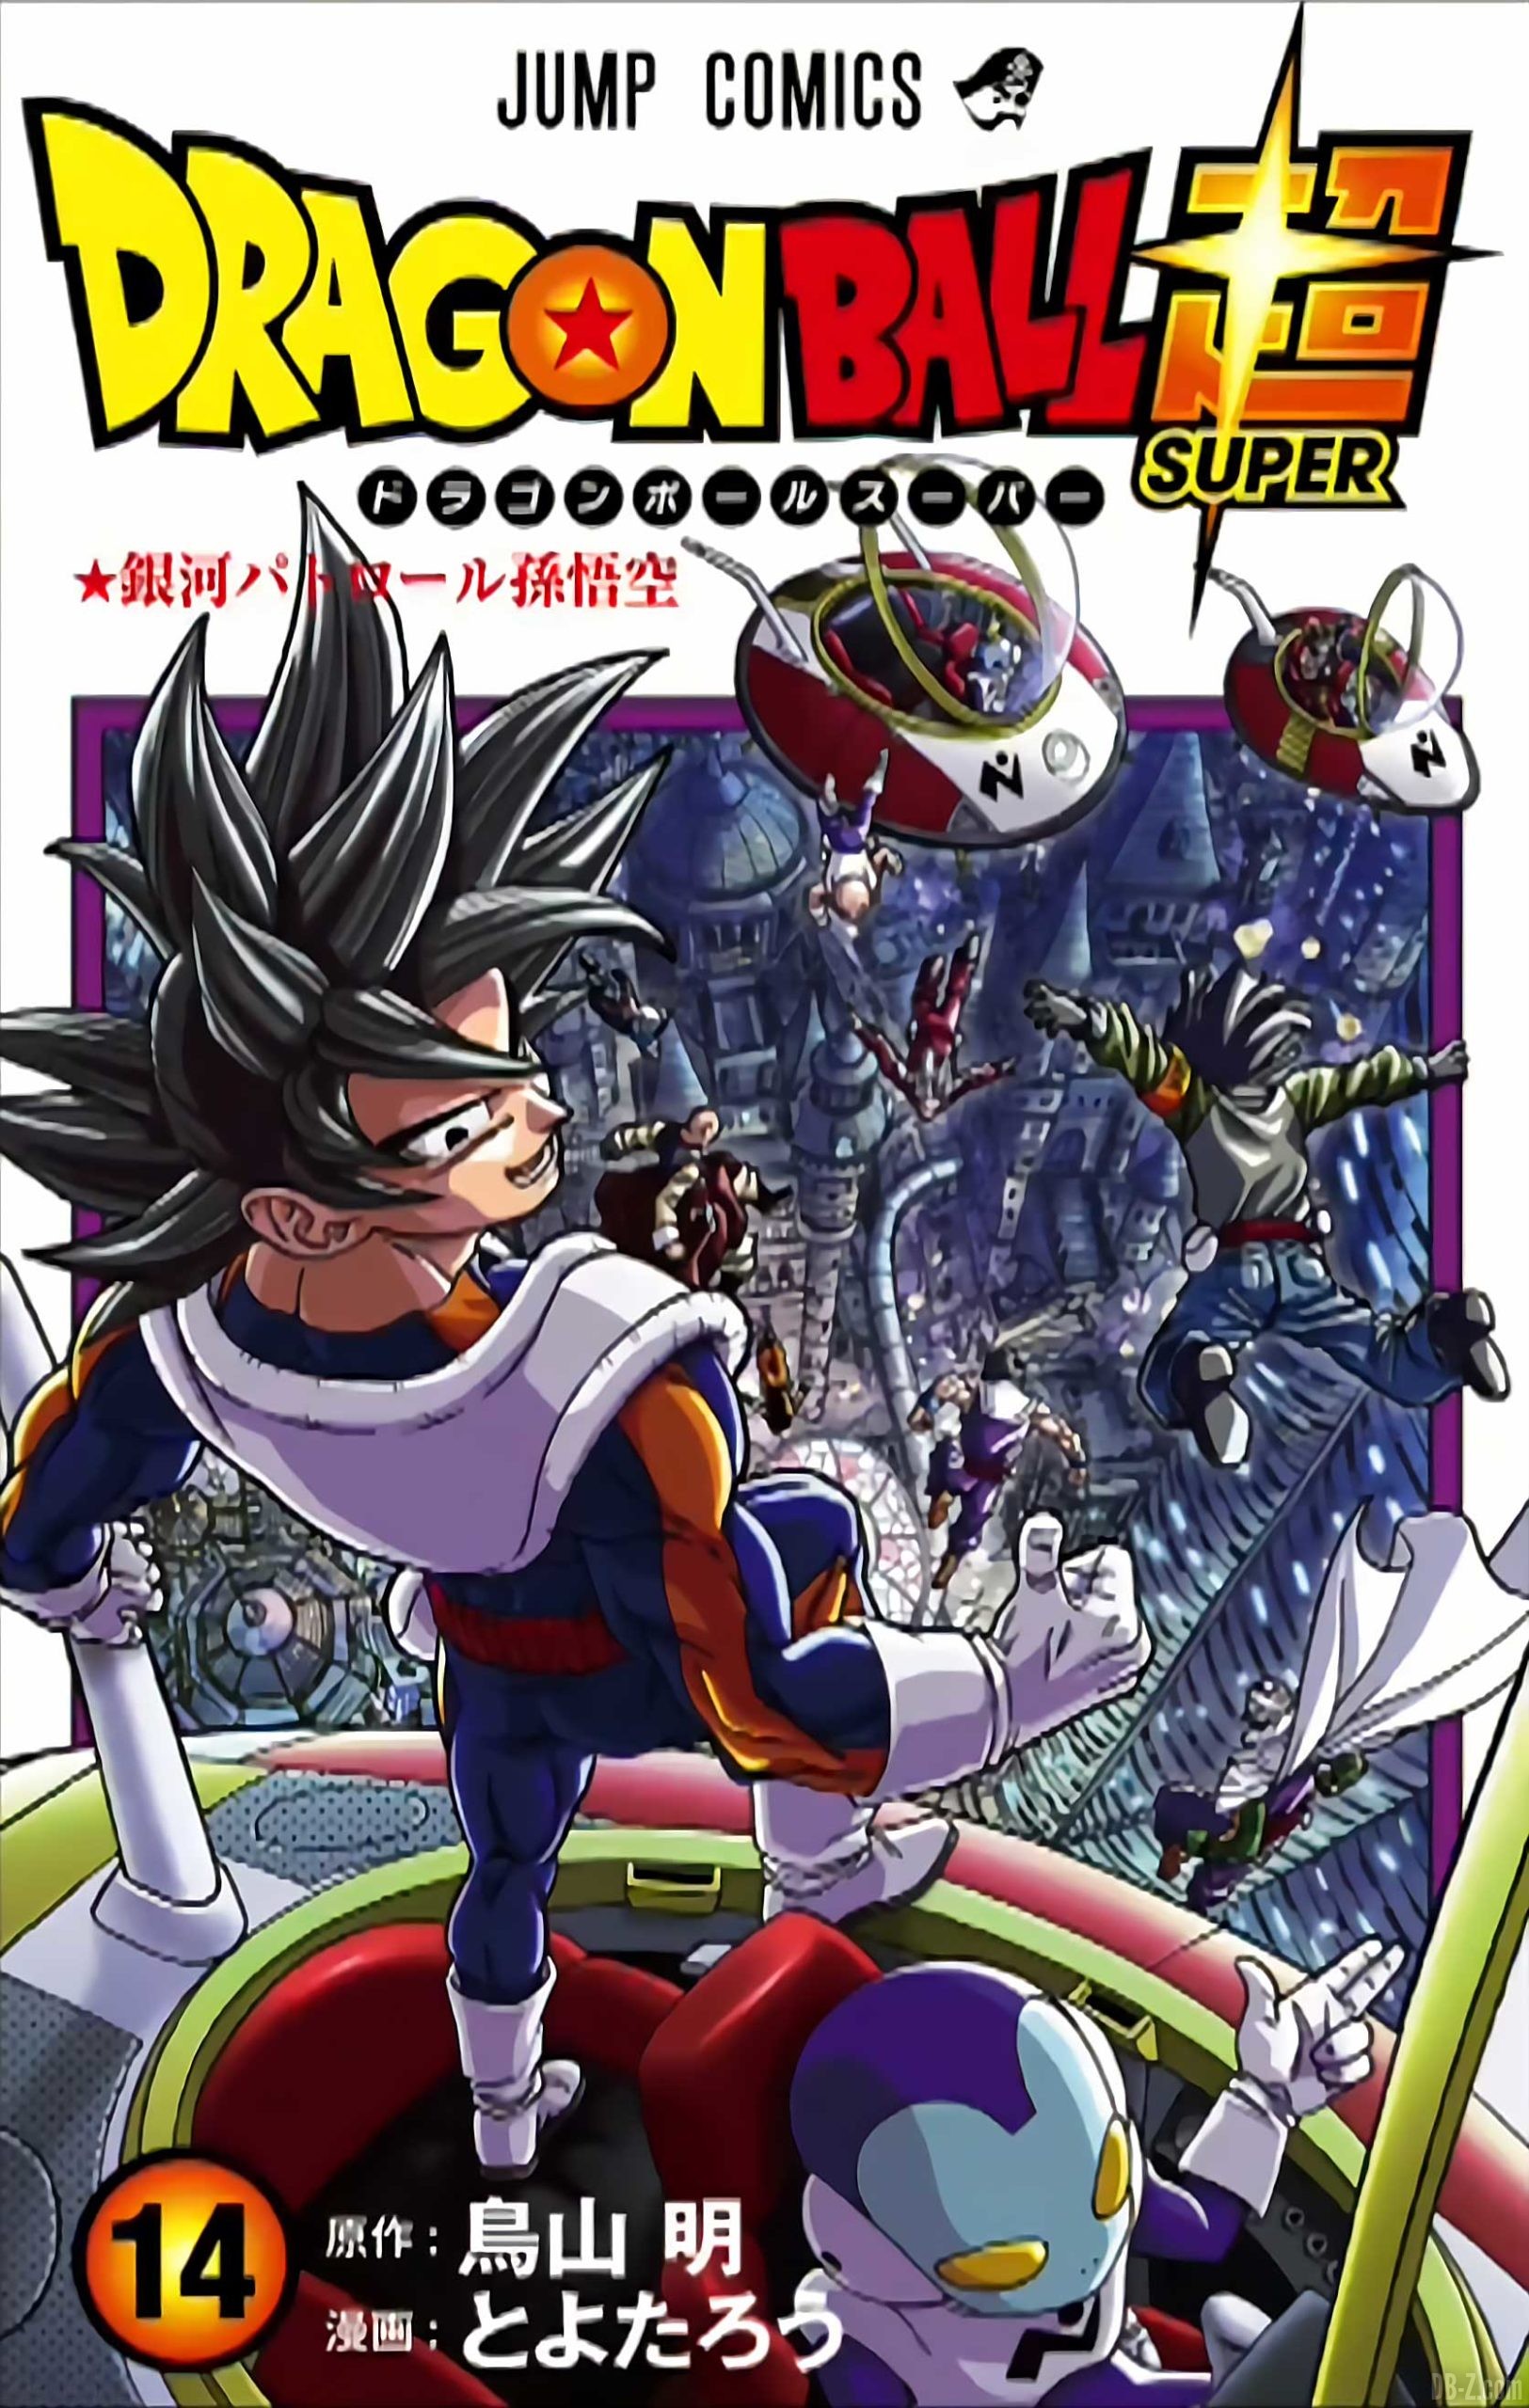 La cover du tome 14 de Dragon Ball Super se dévoile | Dragon Ball Super  France